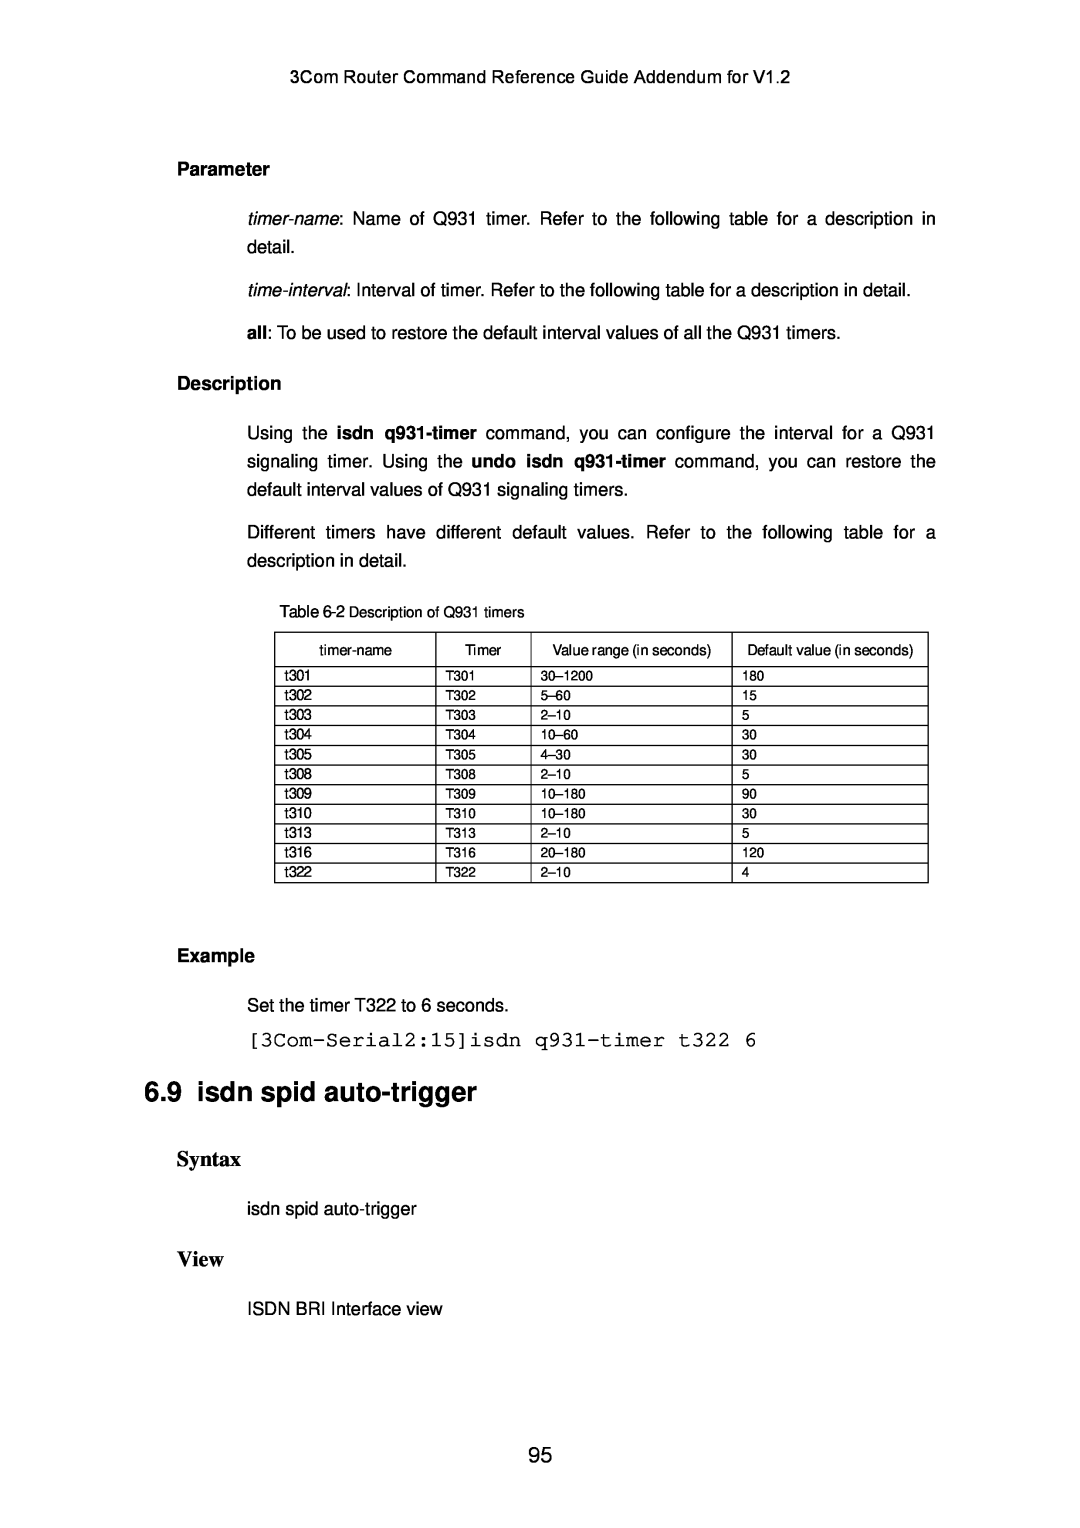 3Com 10014302 manual isdn spid auto-trigger, Syntax, View, Parameter, Description, Example 